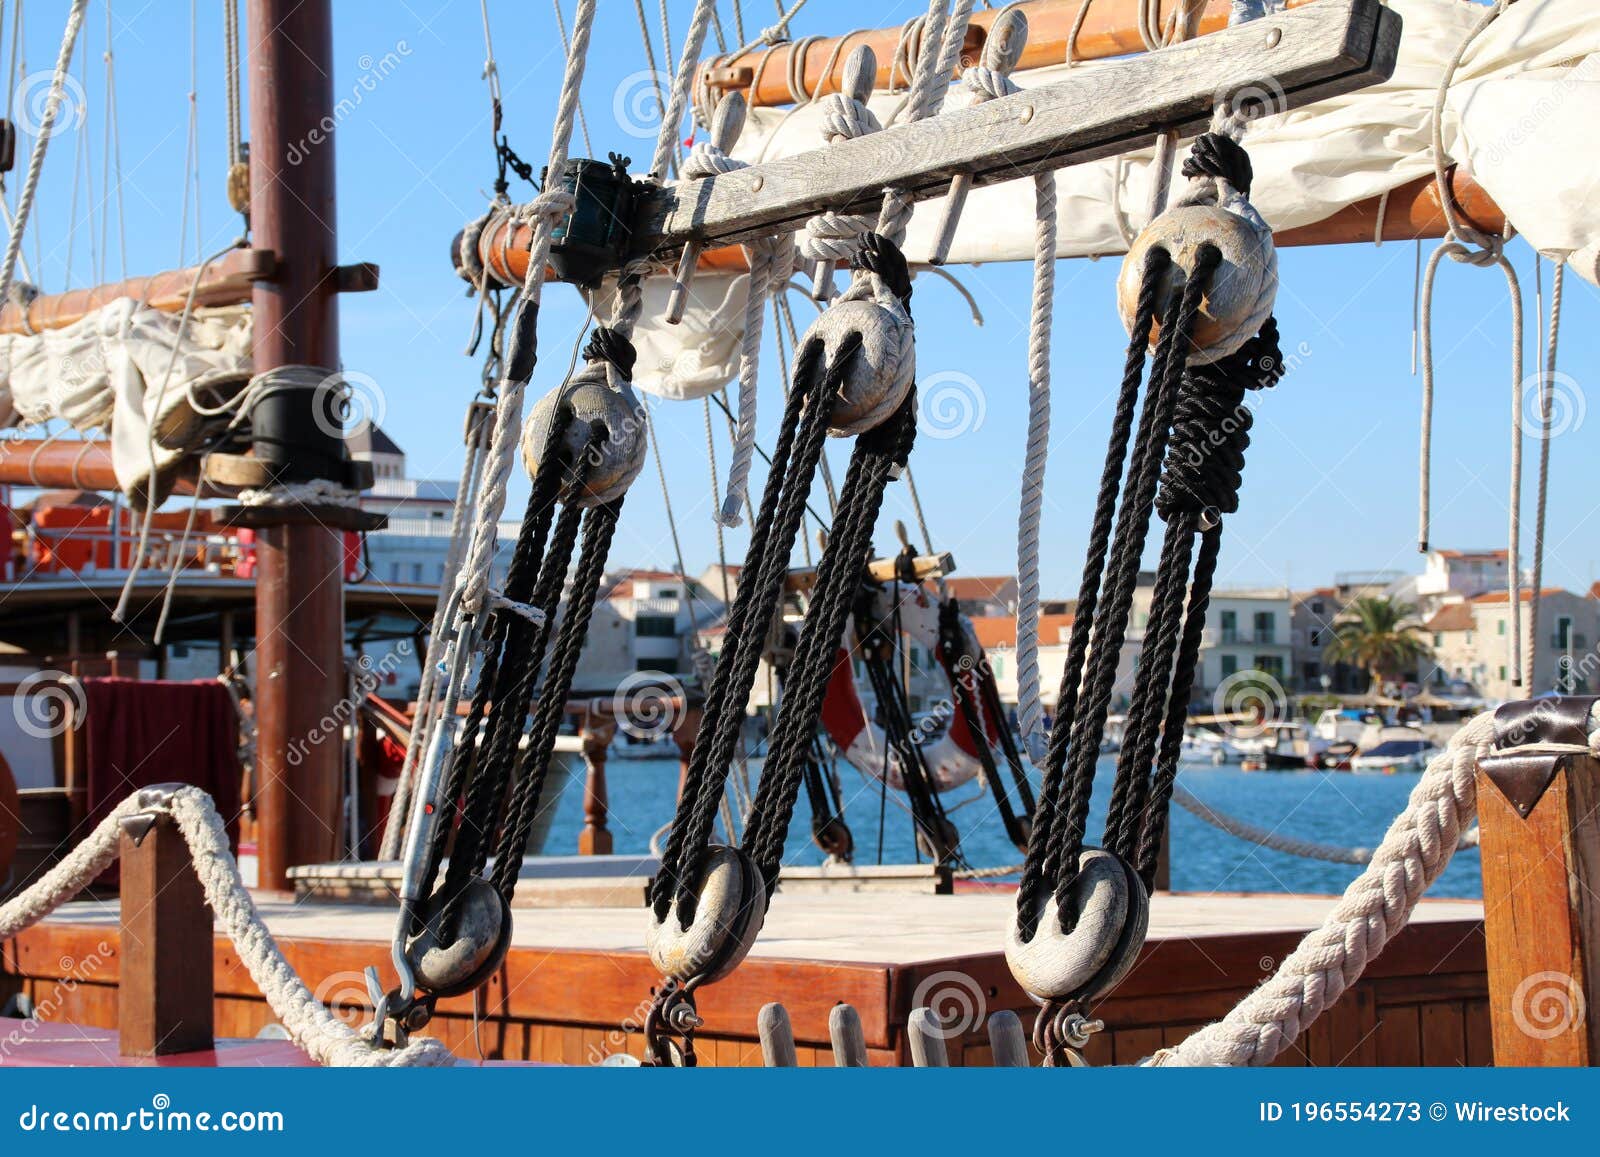 Closeup Shot of Ship Rigging Ropes Stock Image - Image of rope